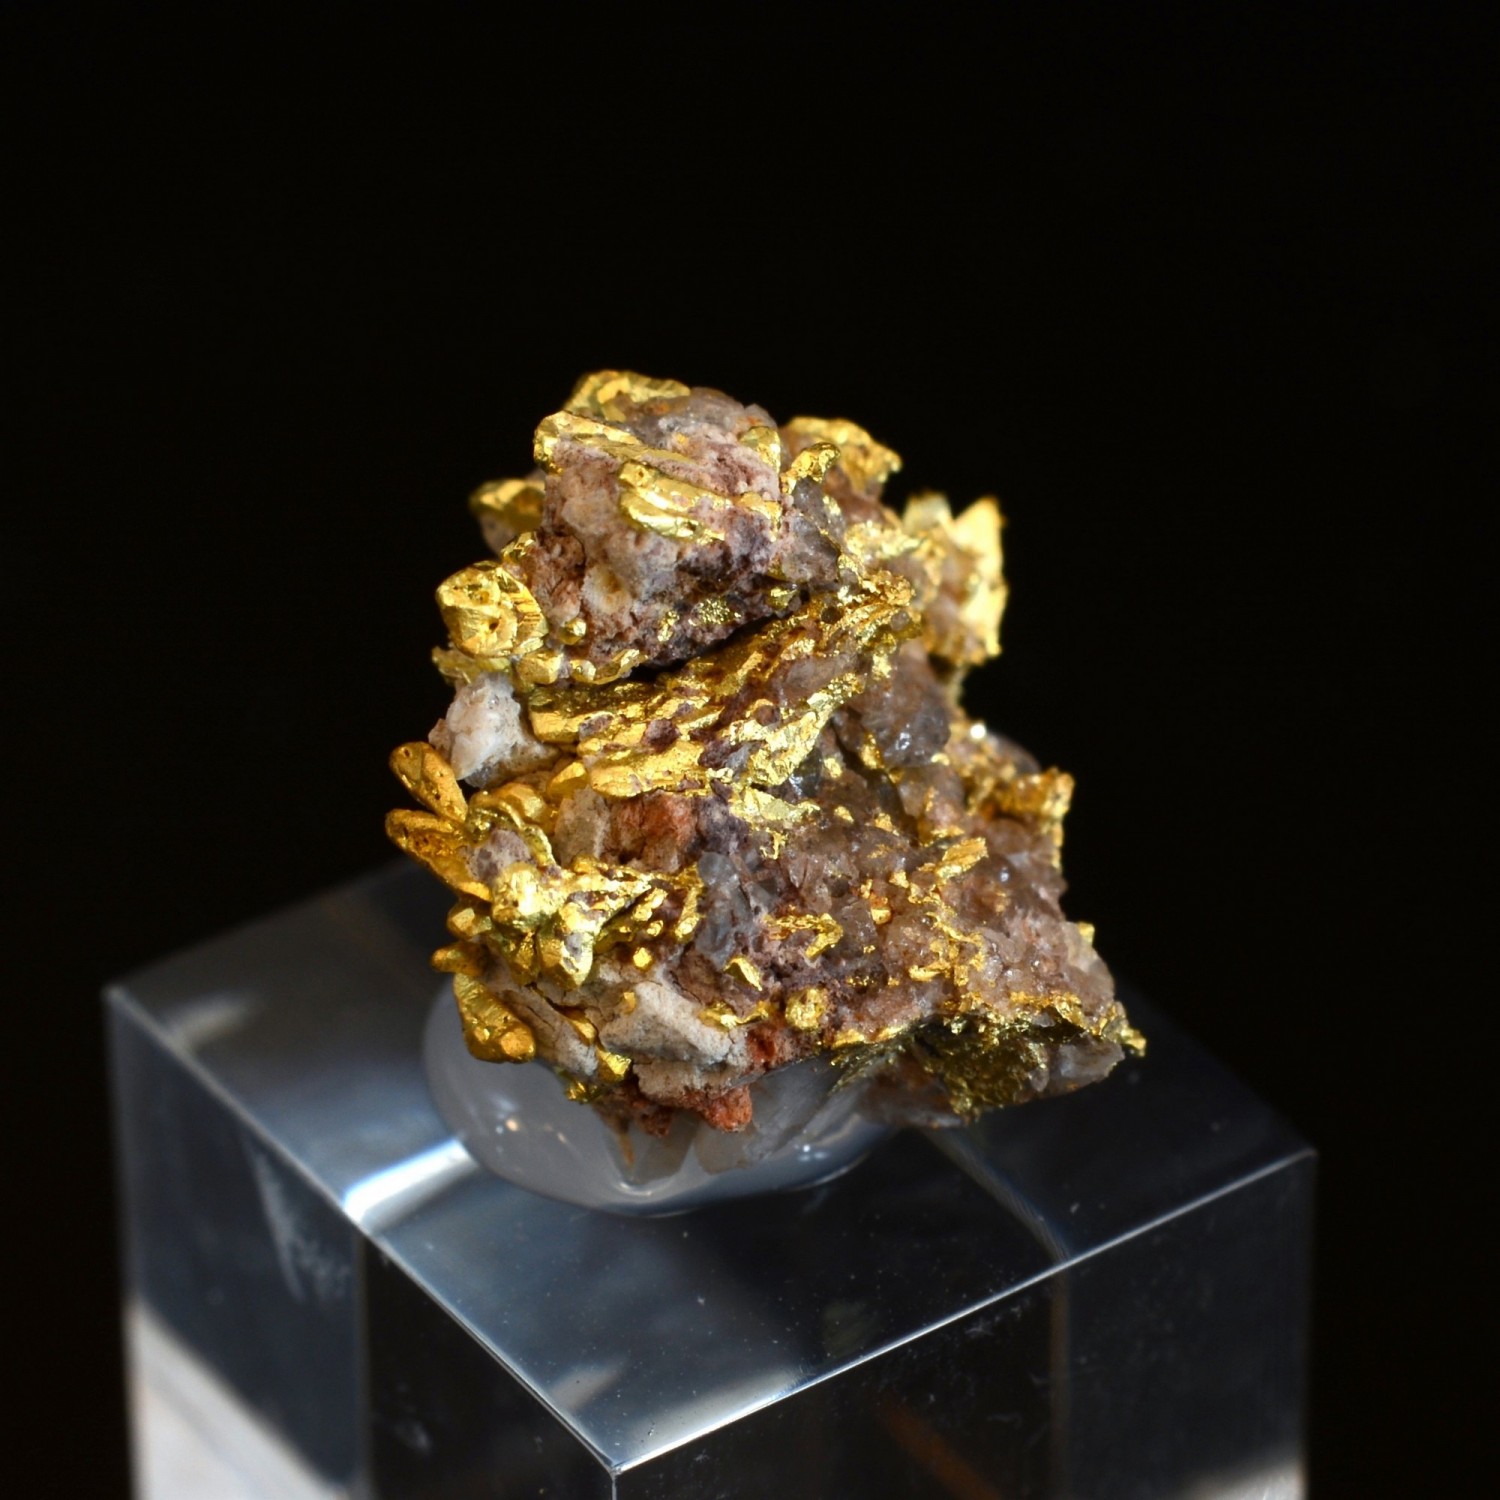 Or natif cristallisé et quartz - Environs d'Hennebont, Morbihan, France